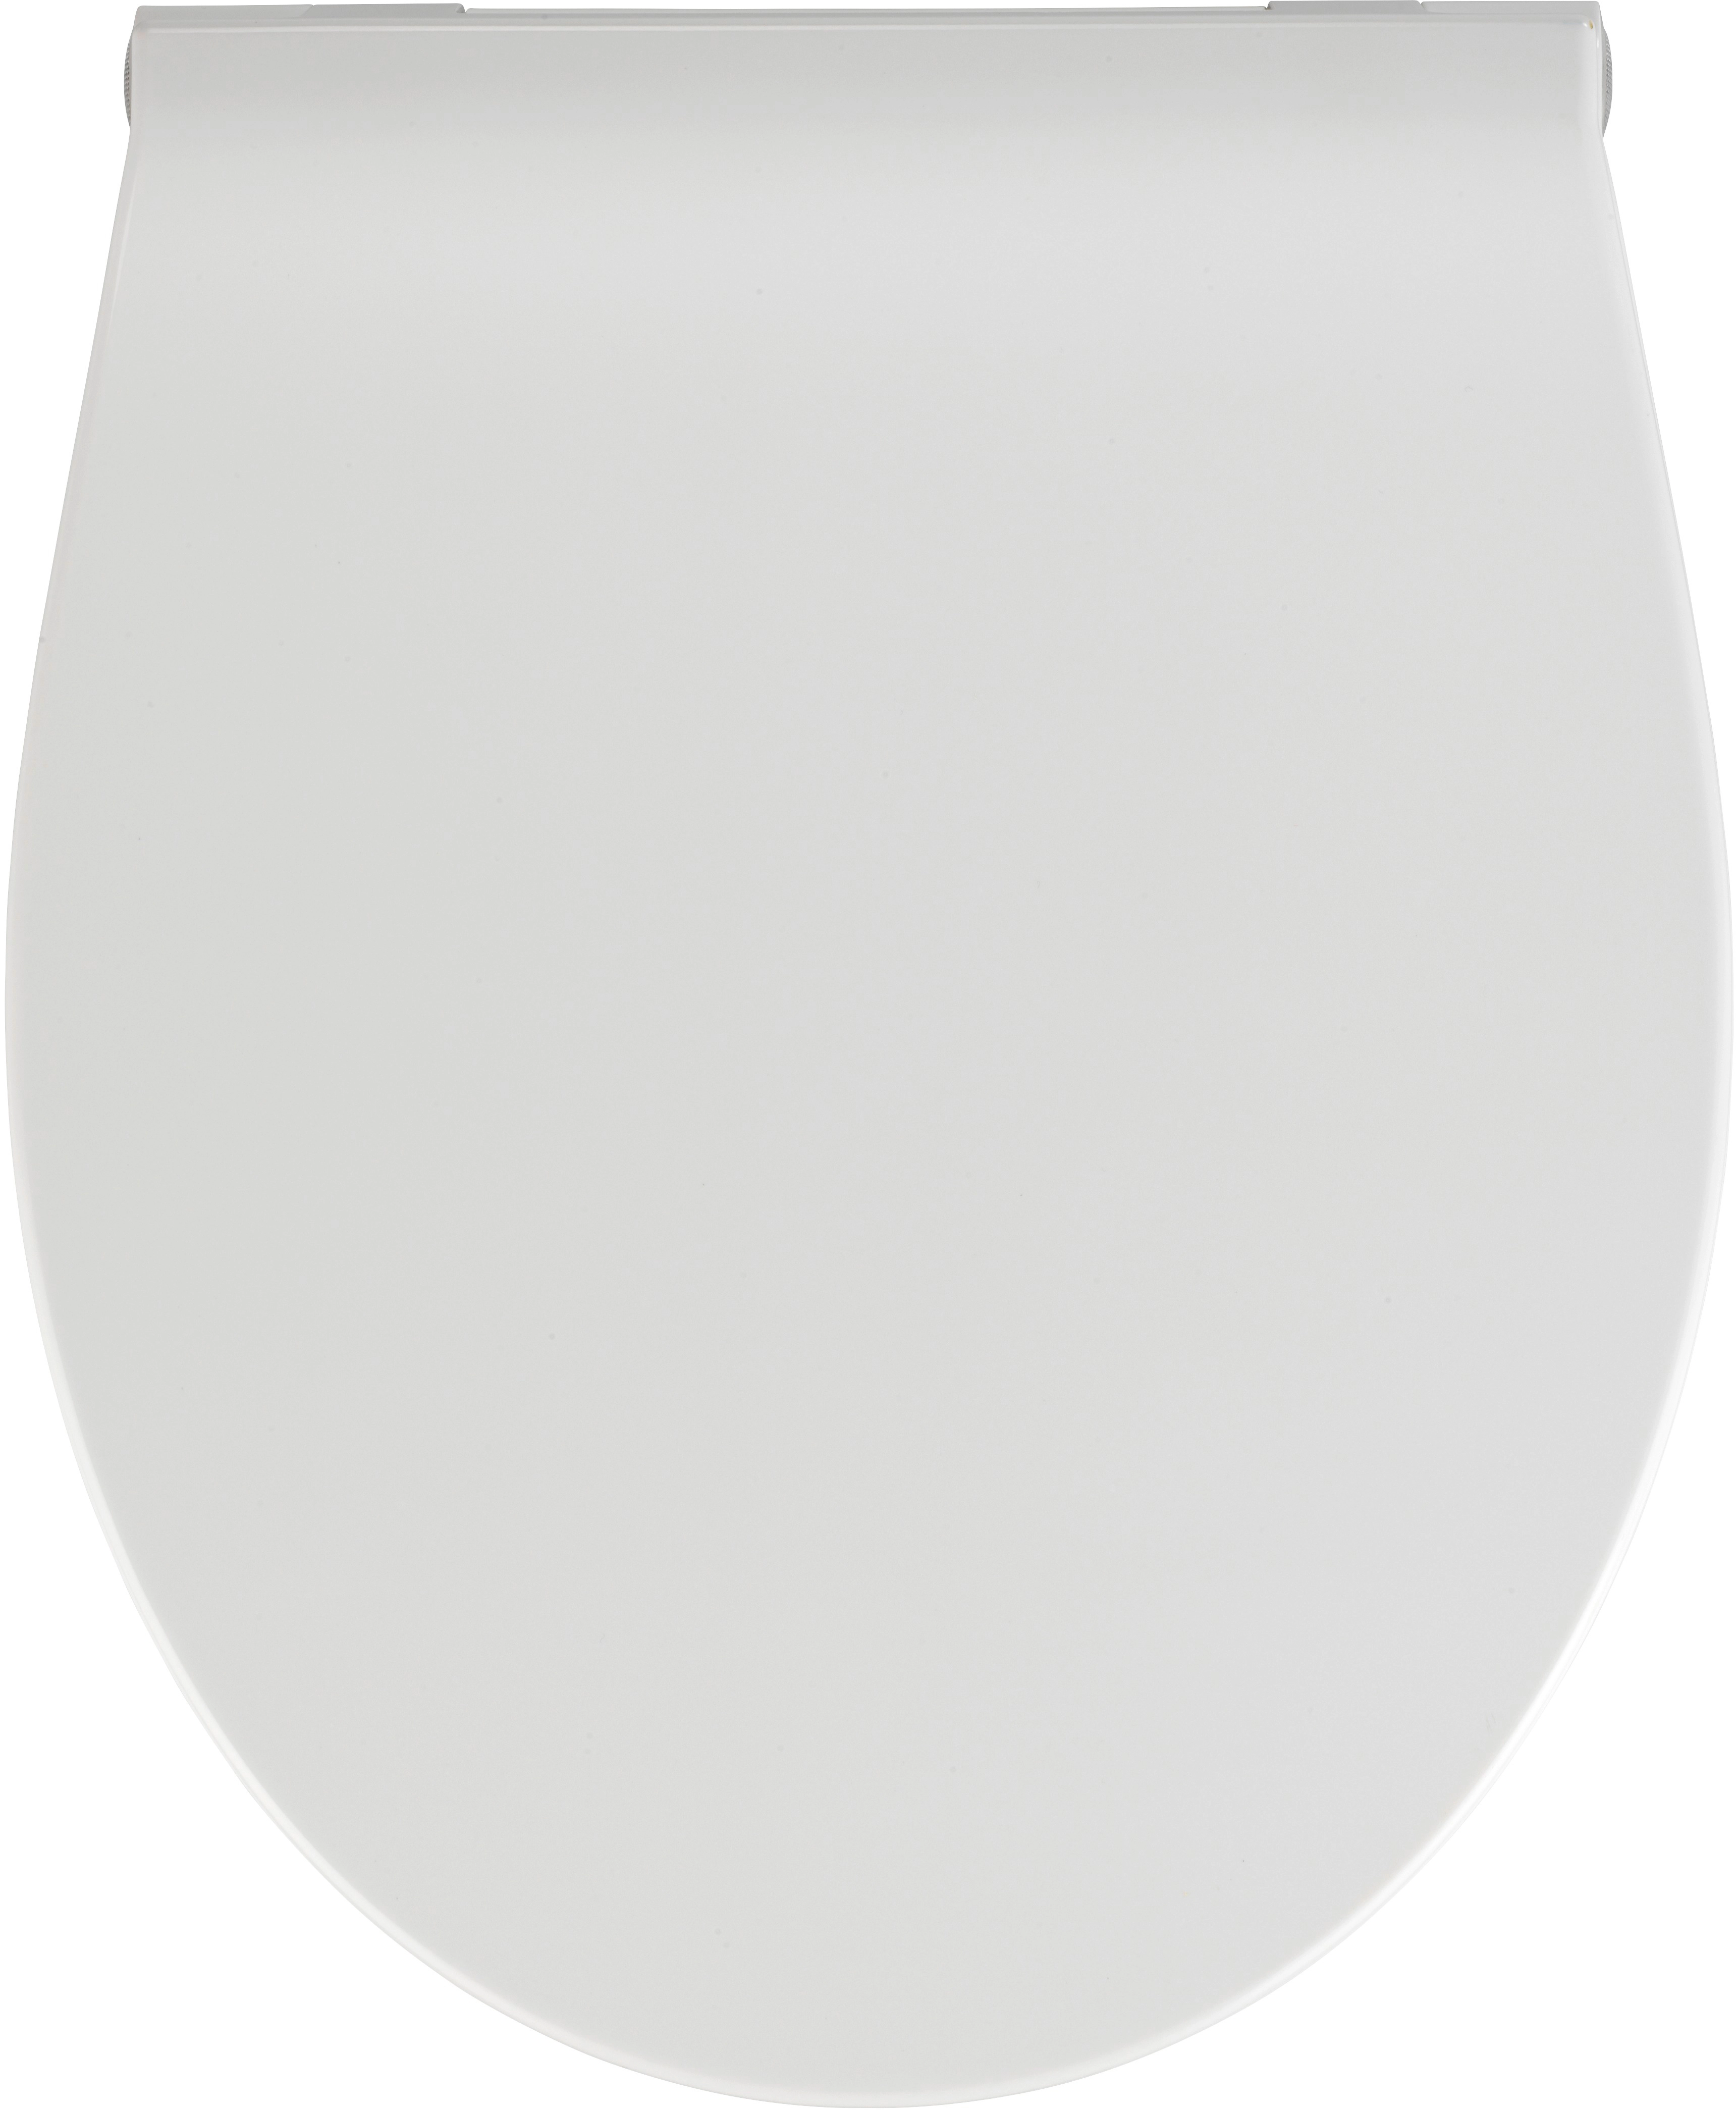 OBI WC-Sitz Weiß kaufen LED Wenko Premium Akustiksensor bei